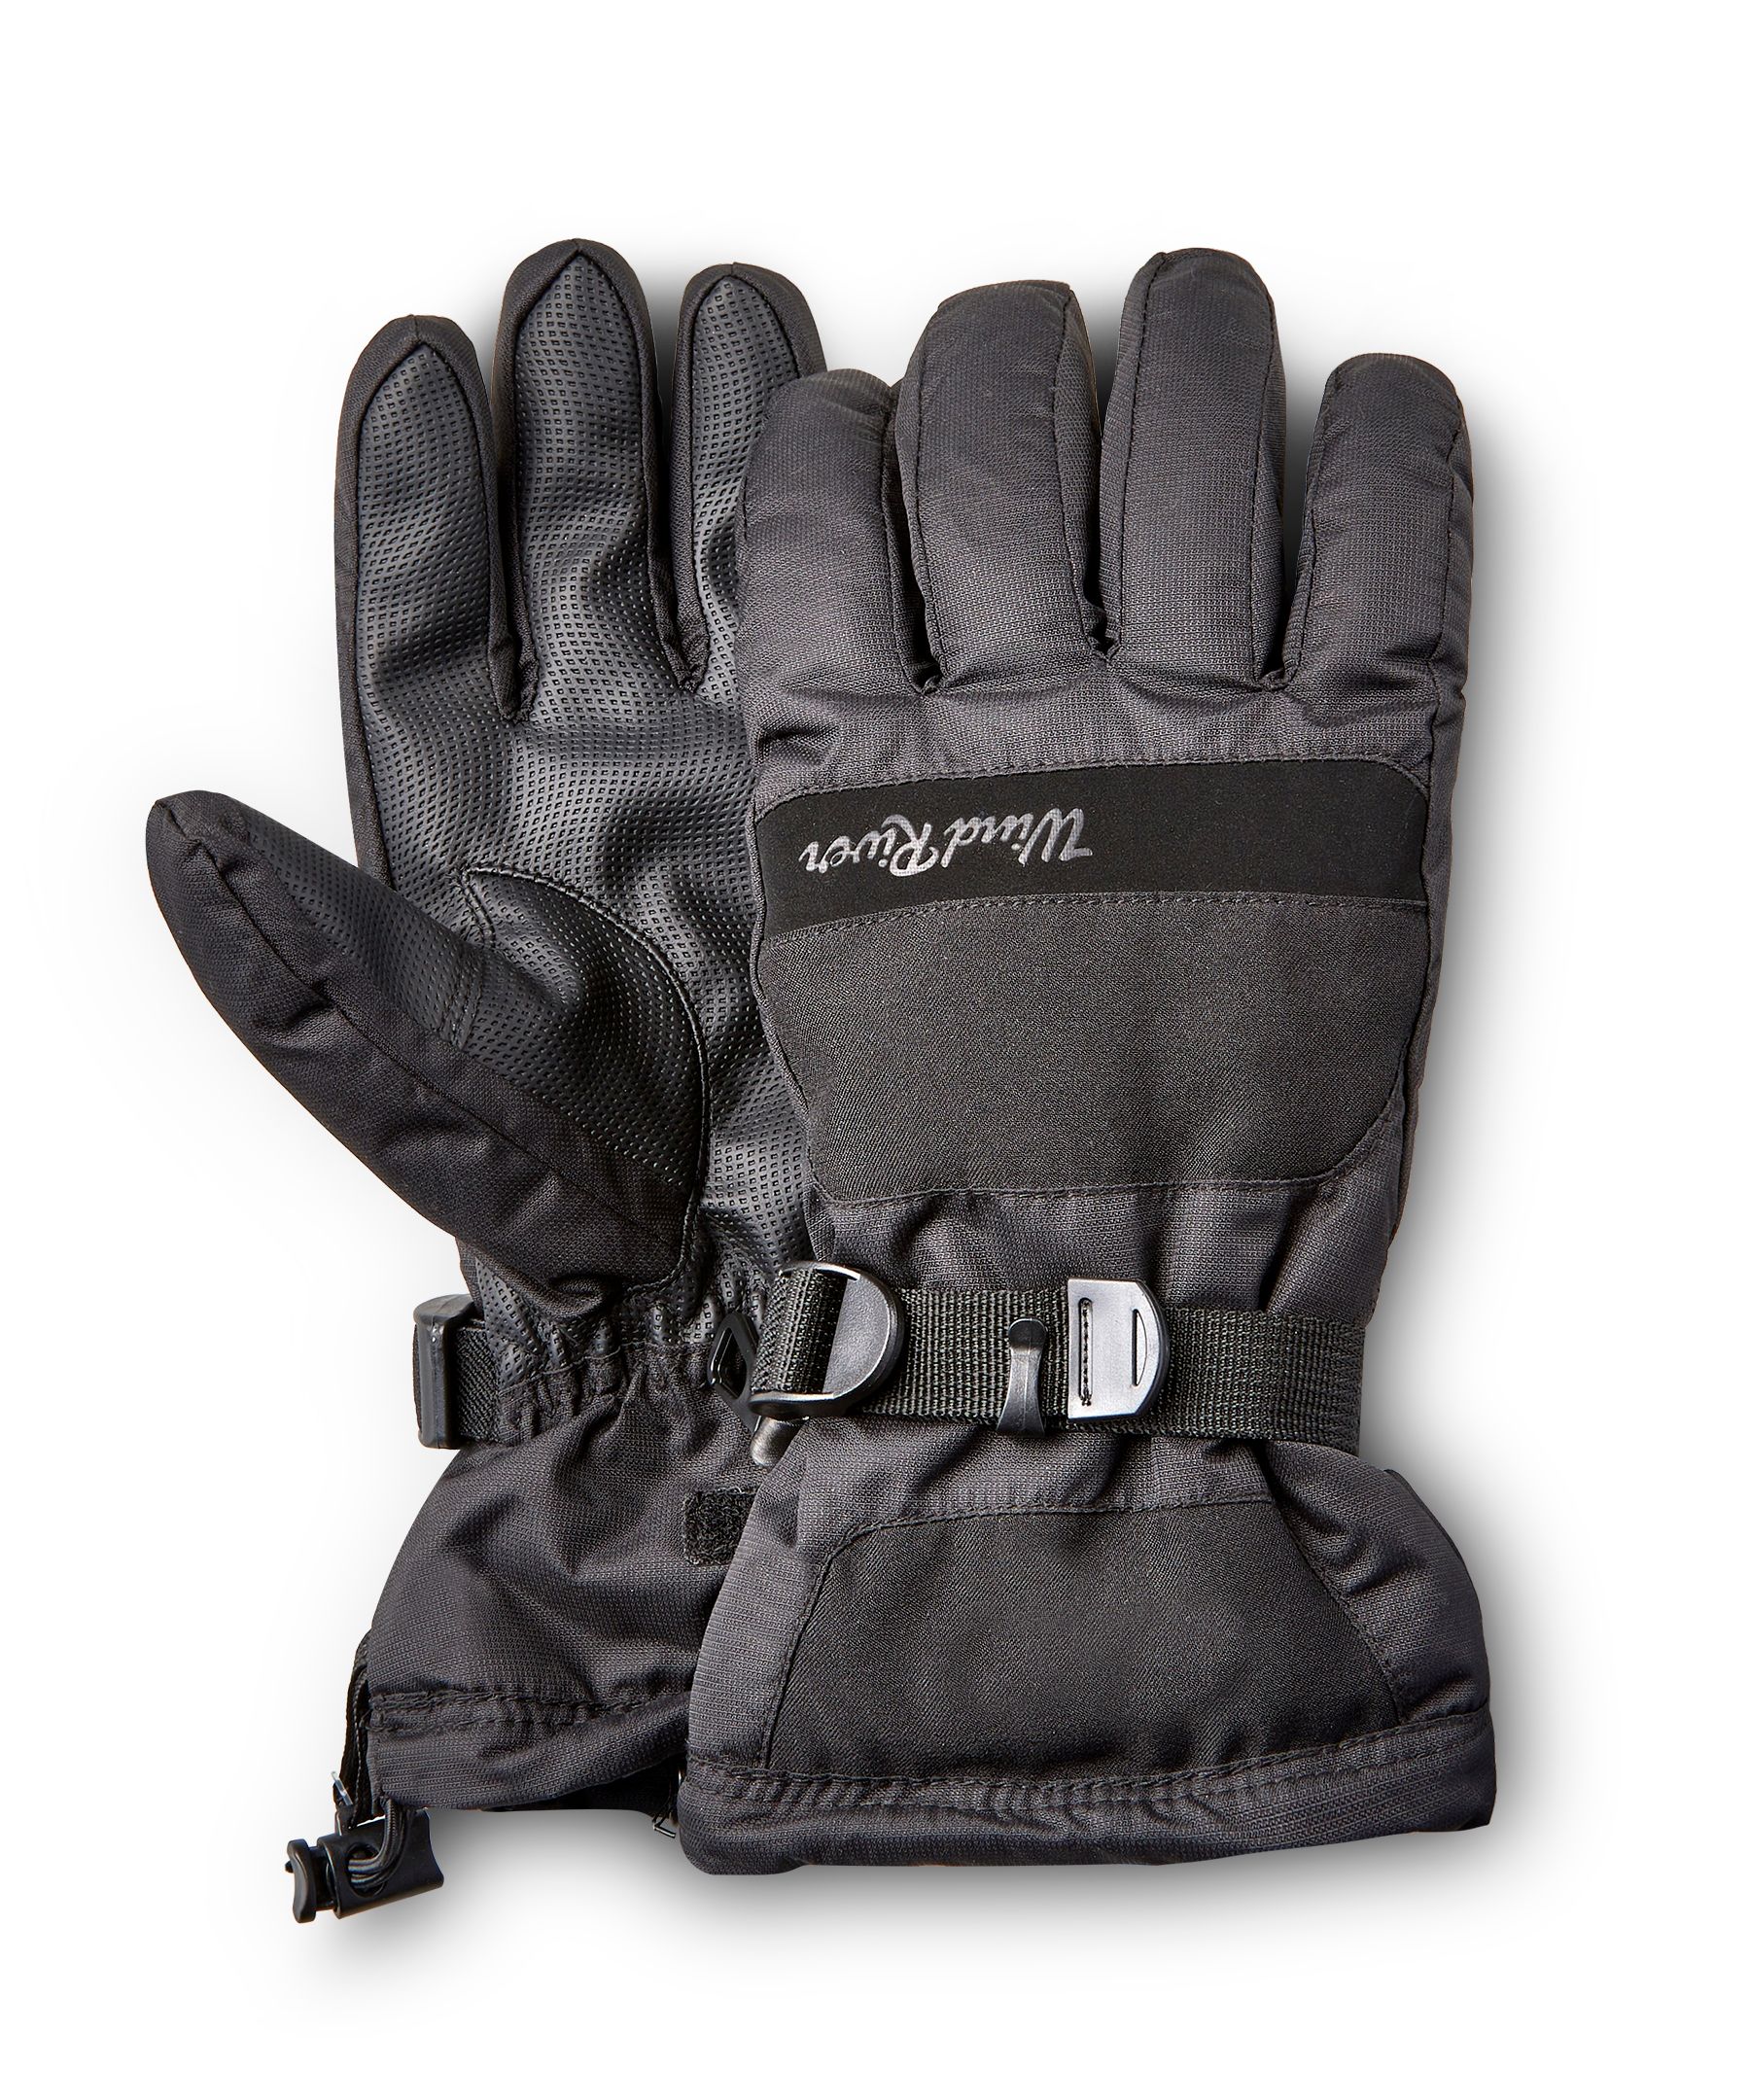 USMC Max Grip NT Fire Resistant Flyers Glove - 8415-01-536-2065